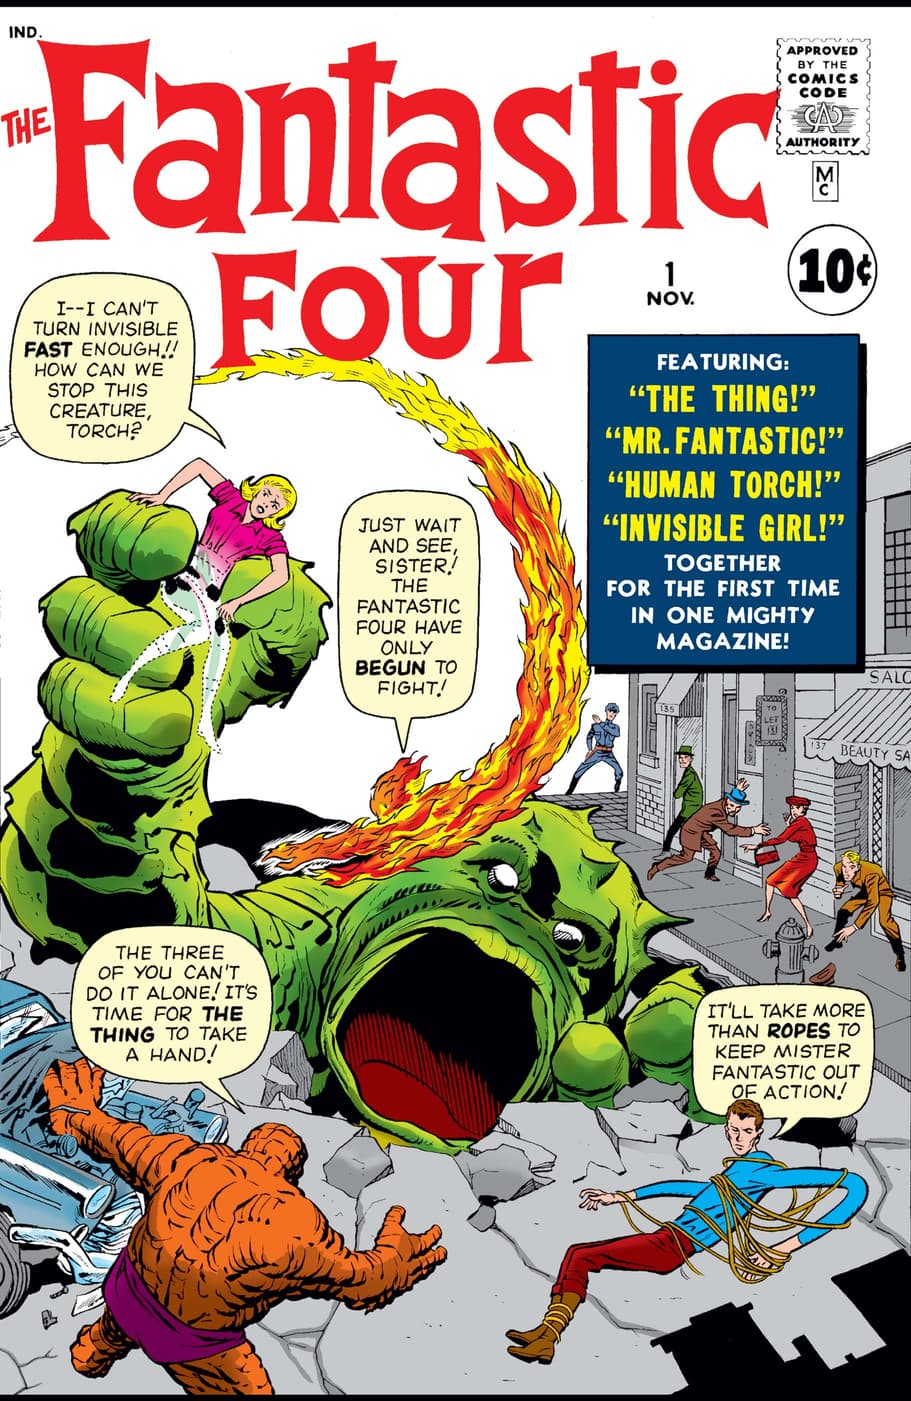 Fantastic Four (1961) #1